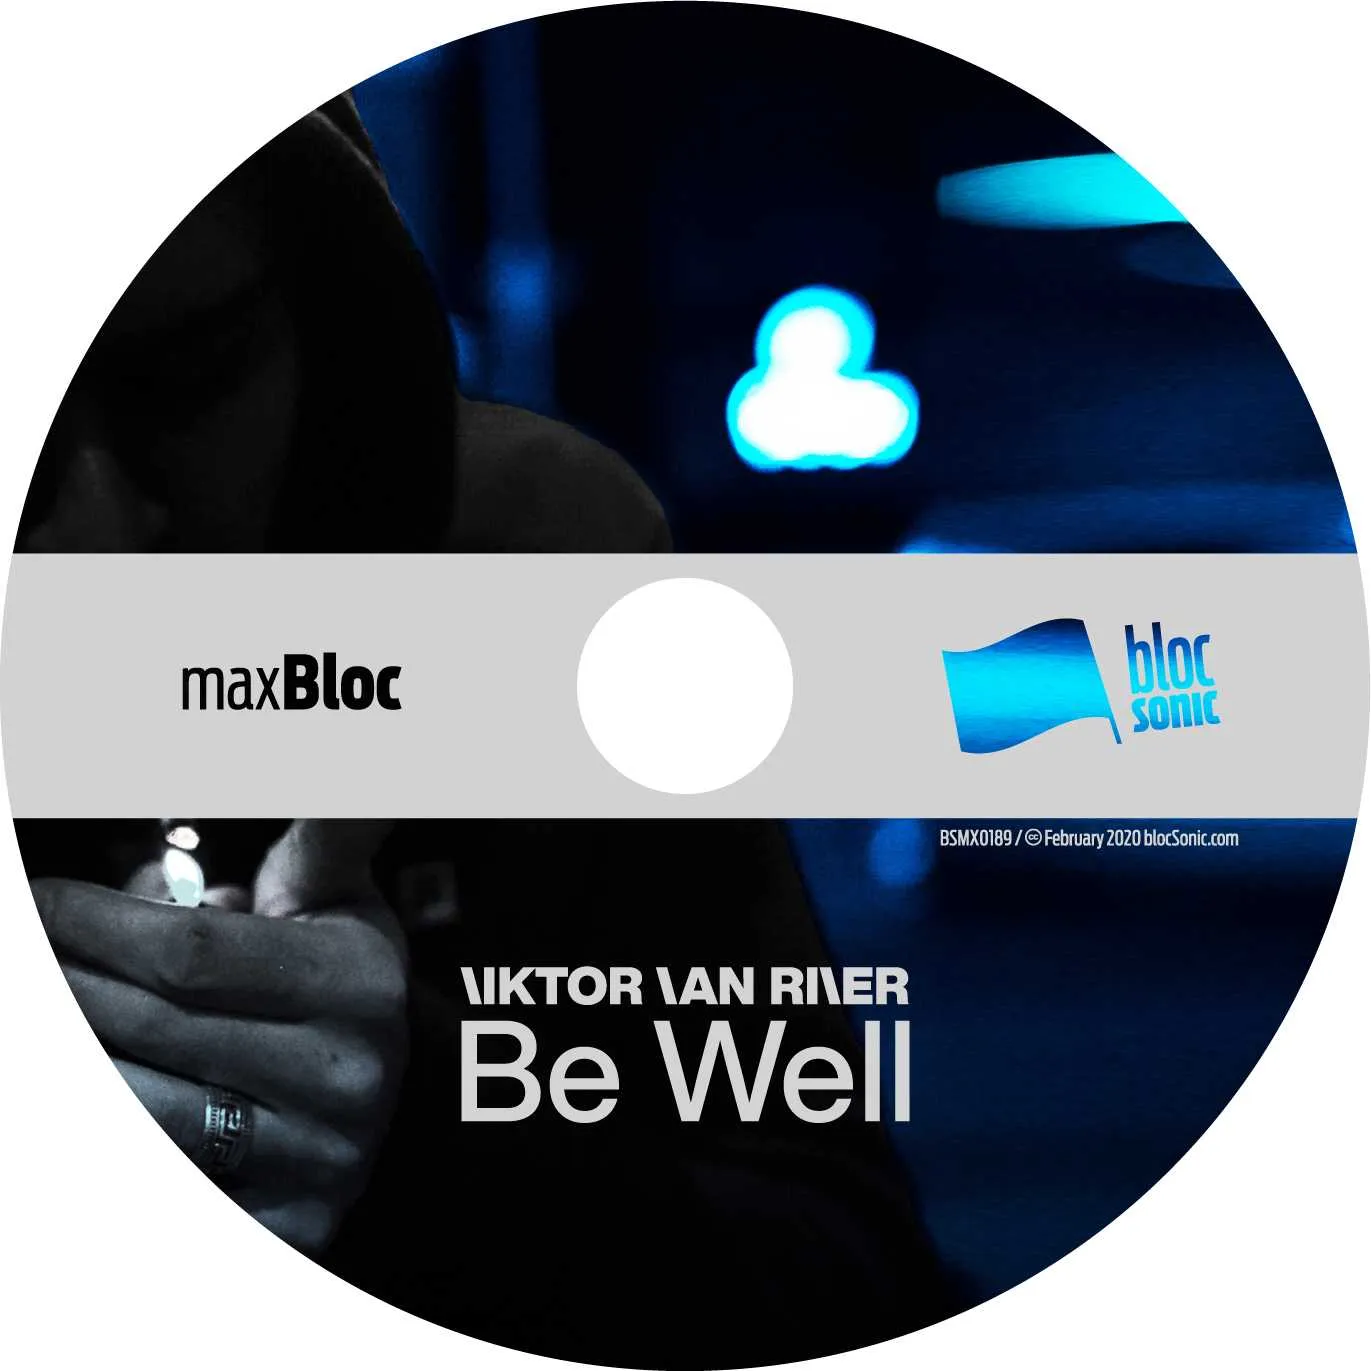 Album disc for “Be Well” by Viktor Van River